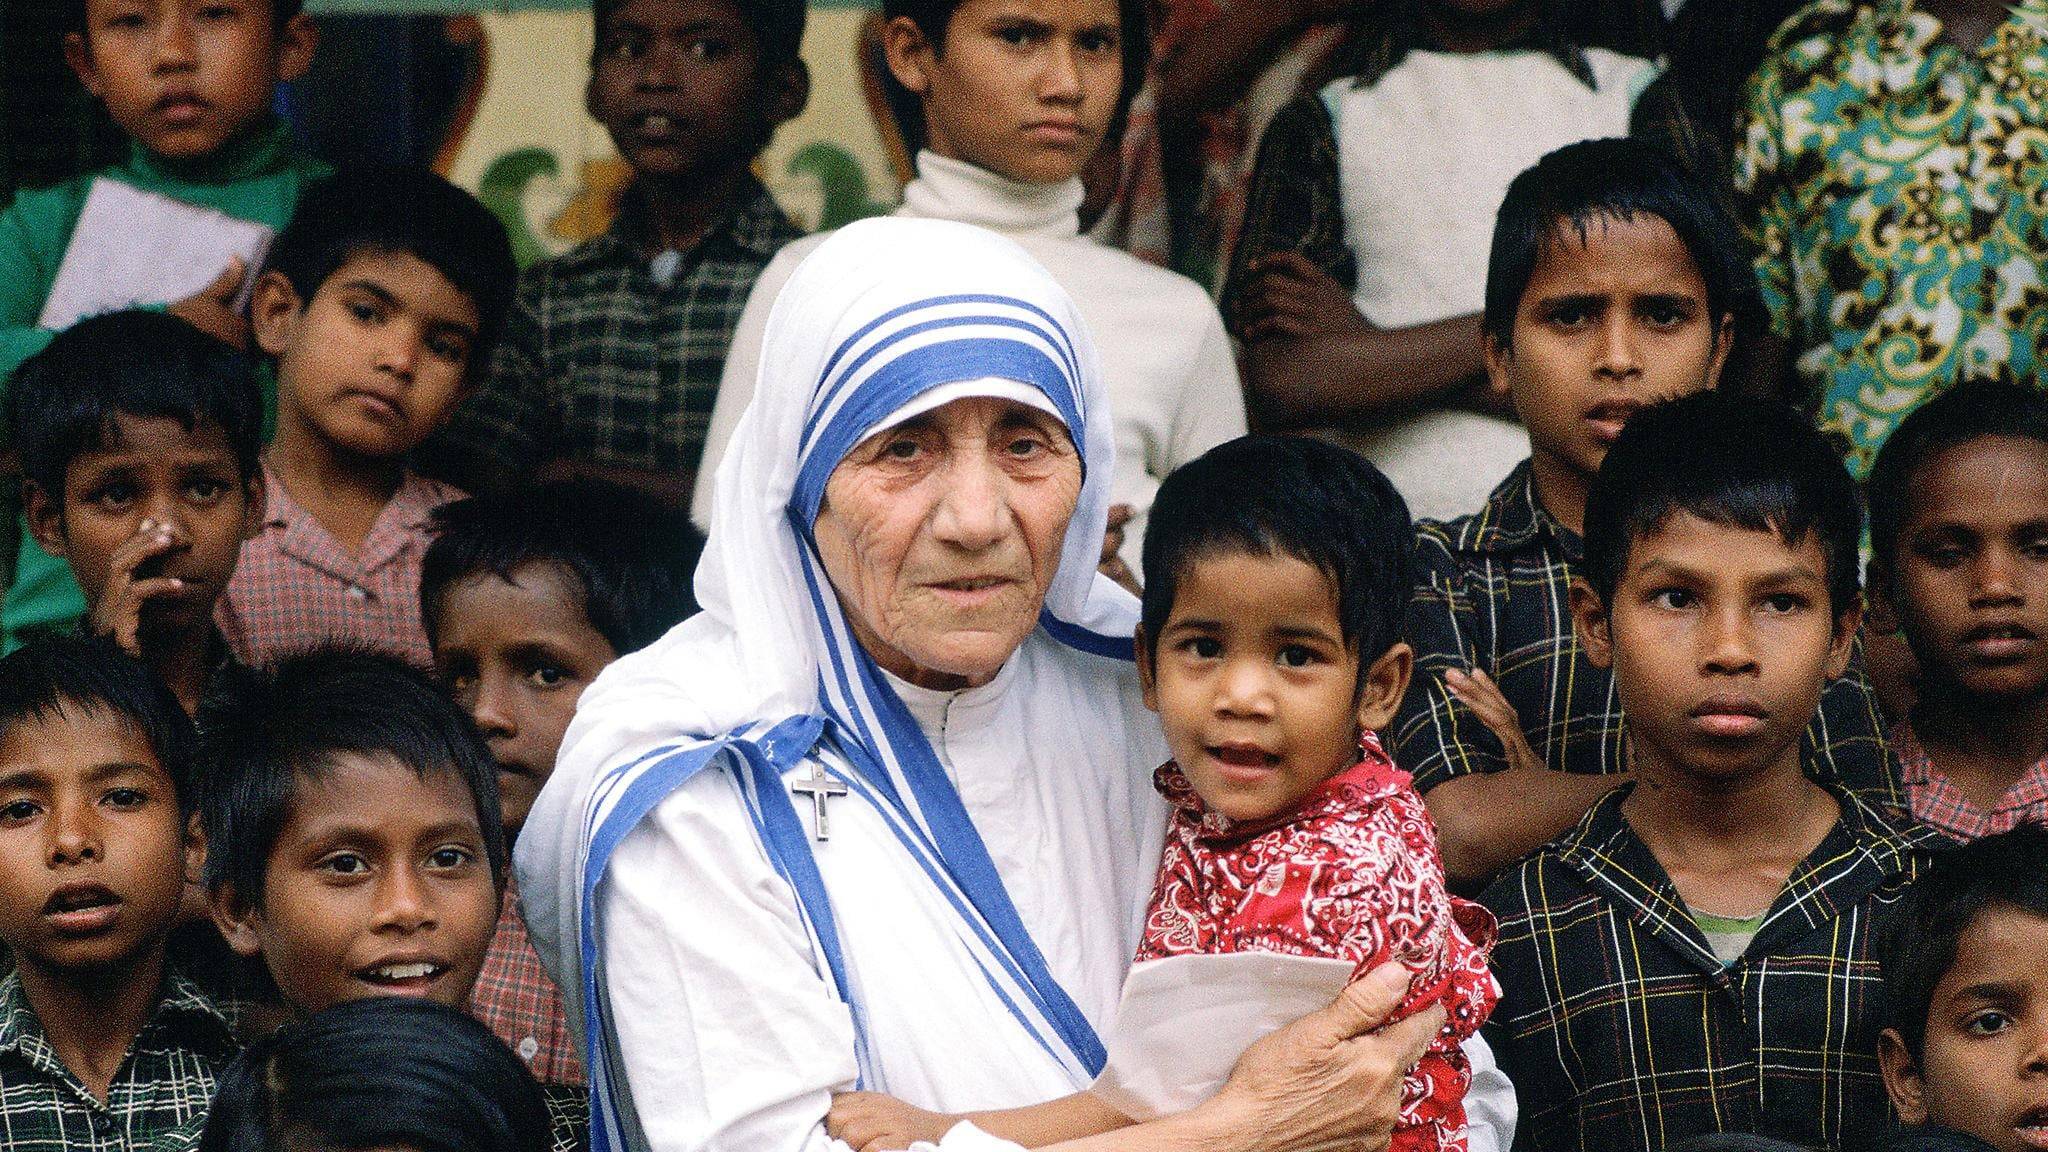 Cubierta de Madre Teresa: ¿Por amor a Dios?